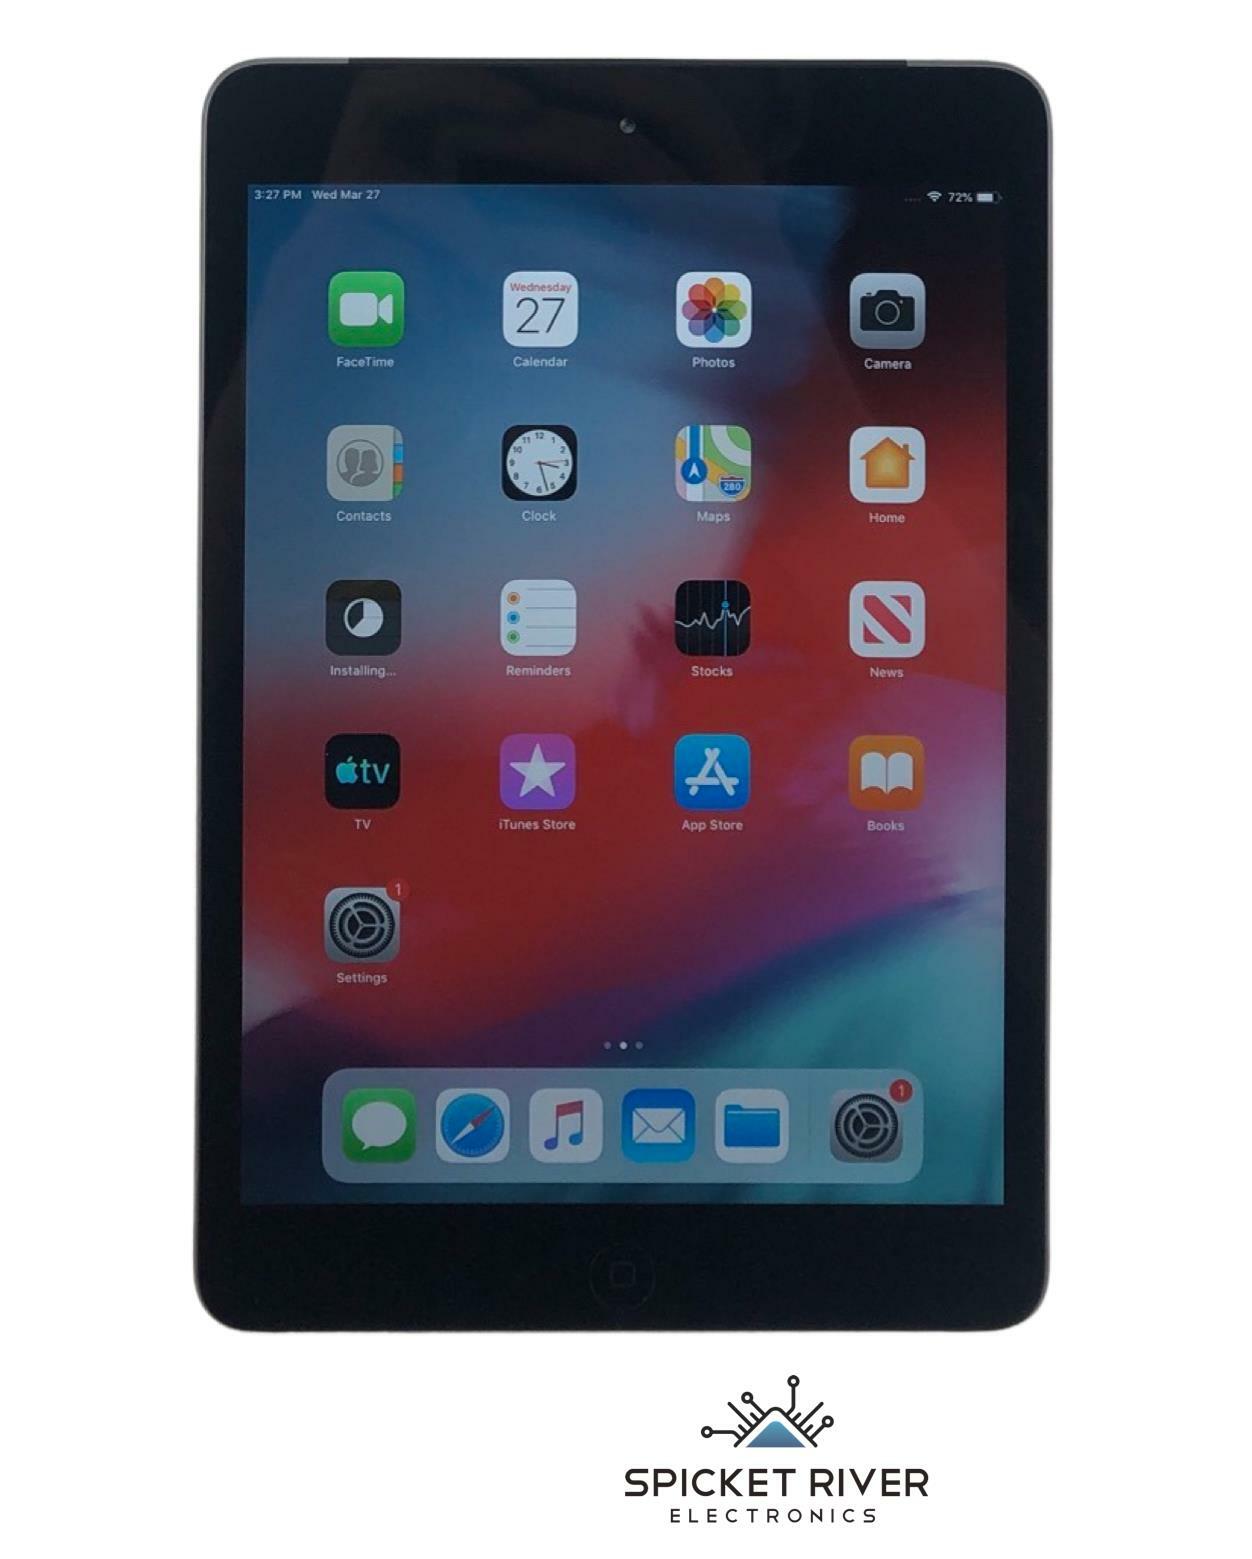 Apple iPad Mini 2 - A1490 - Wi-Fi + Cellular 32GB 7.9" Tablet - Space Gray